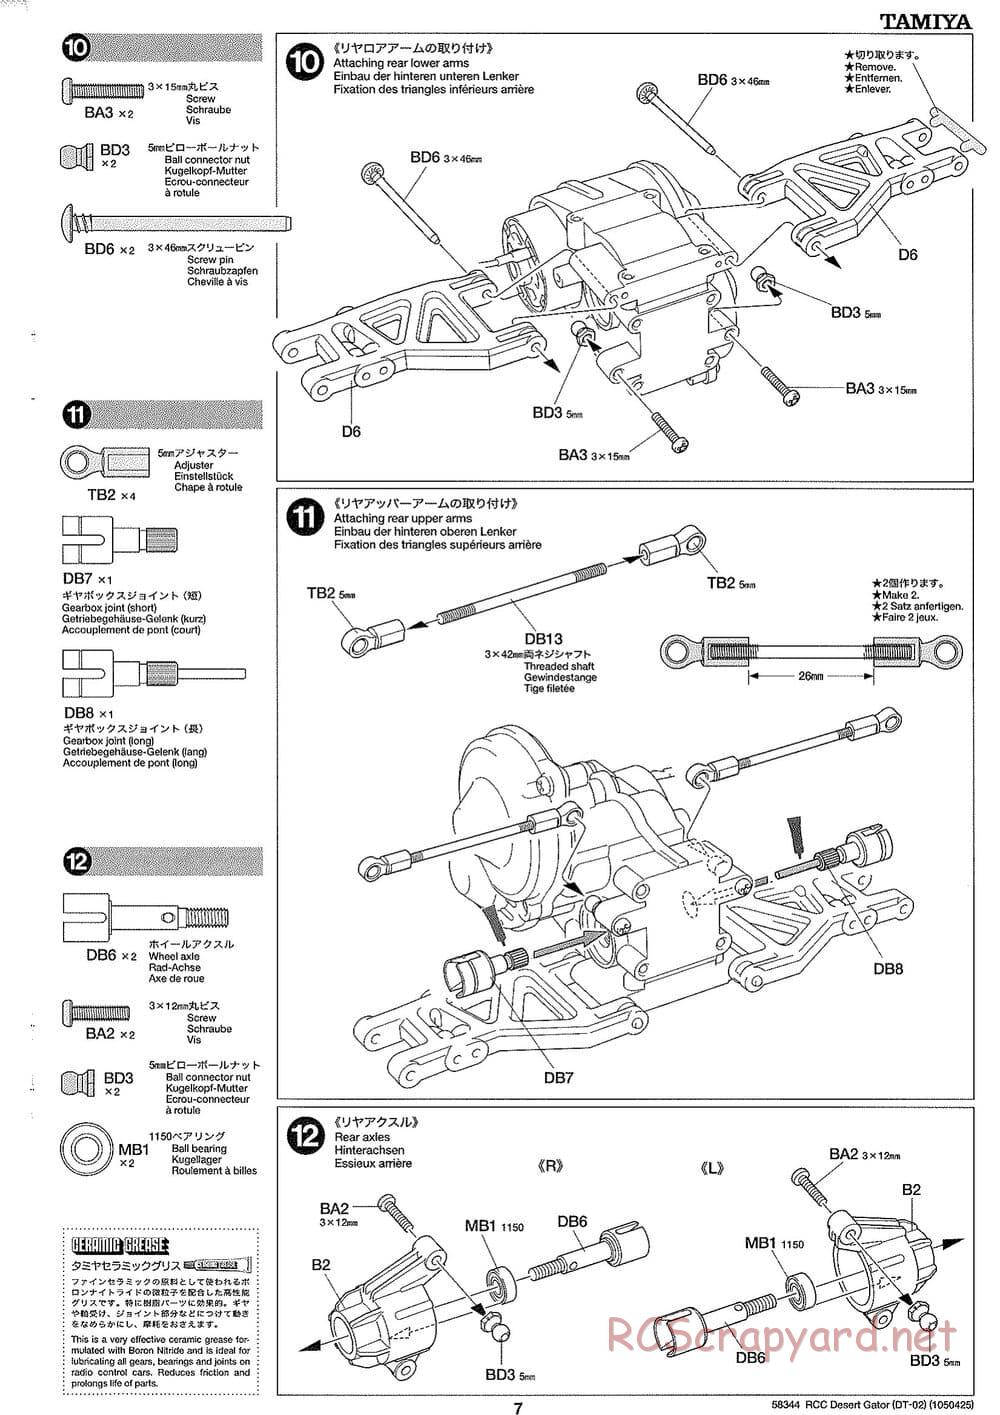 Tamiya - Desert Gator Chassis - Manual - Page 7